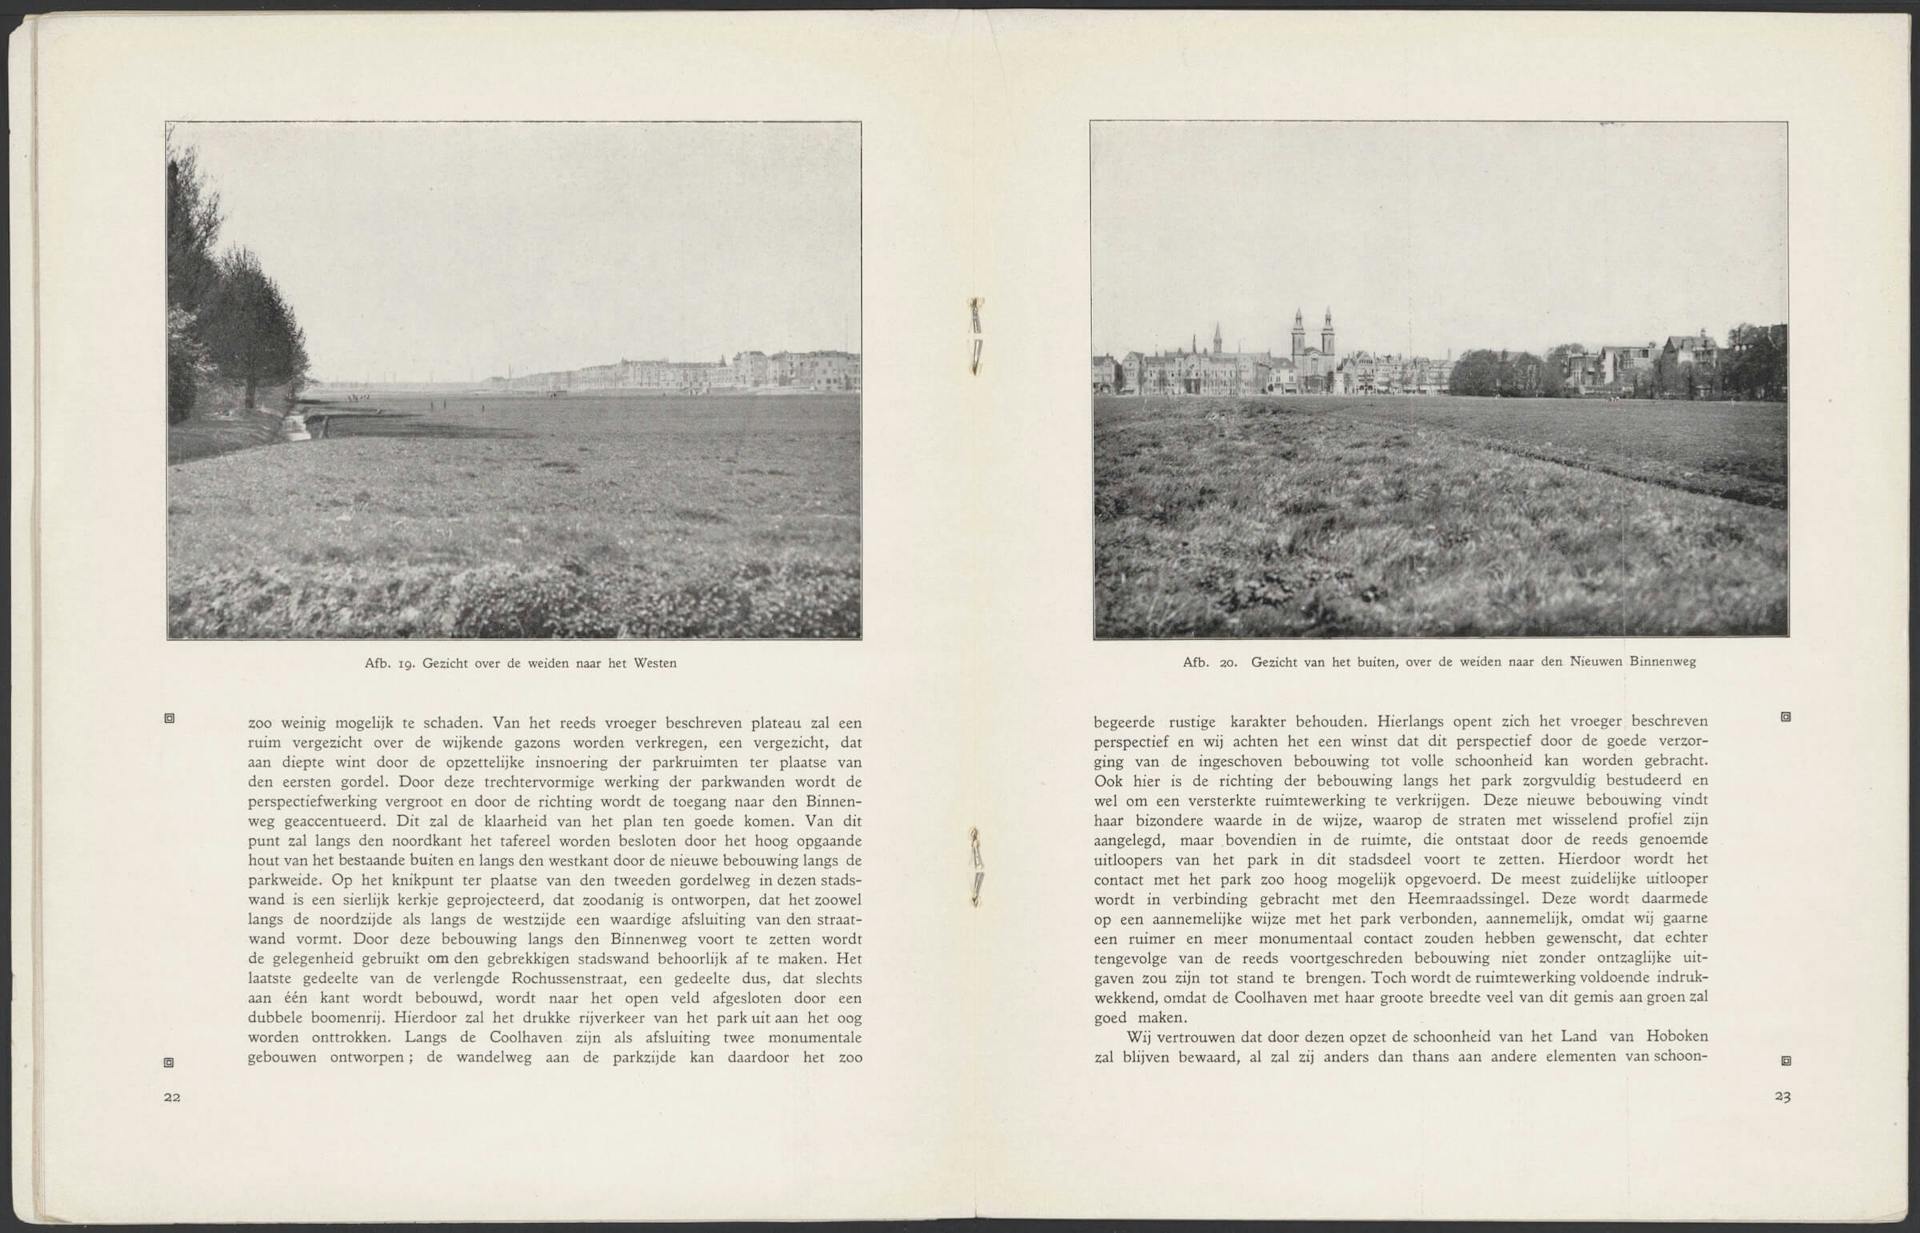 W.G. Witteveen, The Land van Hoboken Expansion Plan, Rotterdam 1927, p. 22-23. Collection Het Nieuwe Instituut, NIROV library, 49.183 